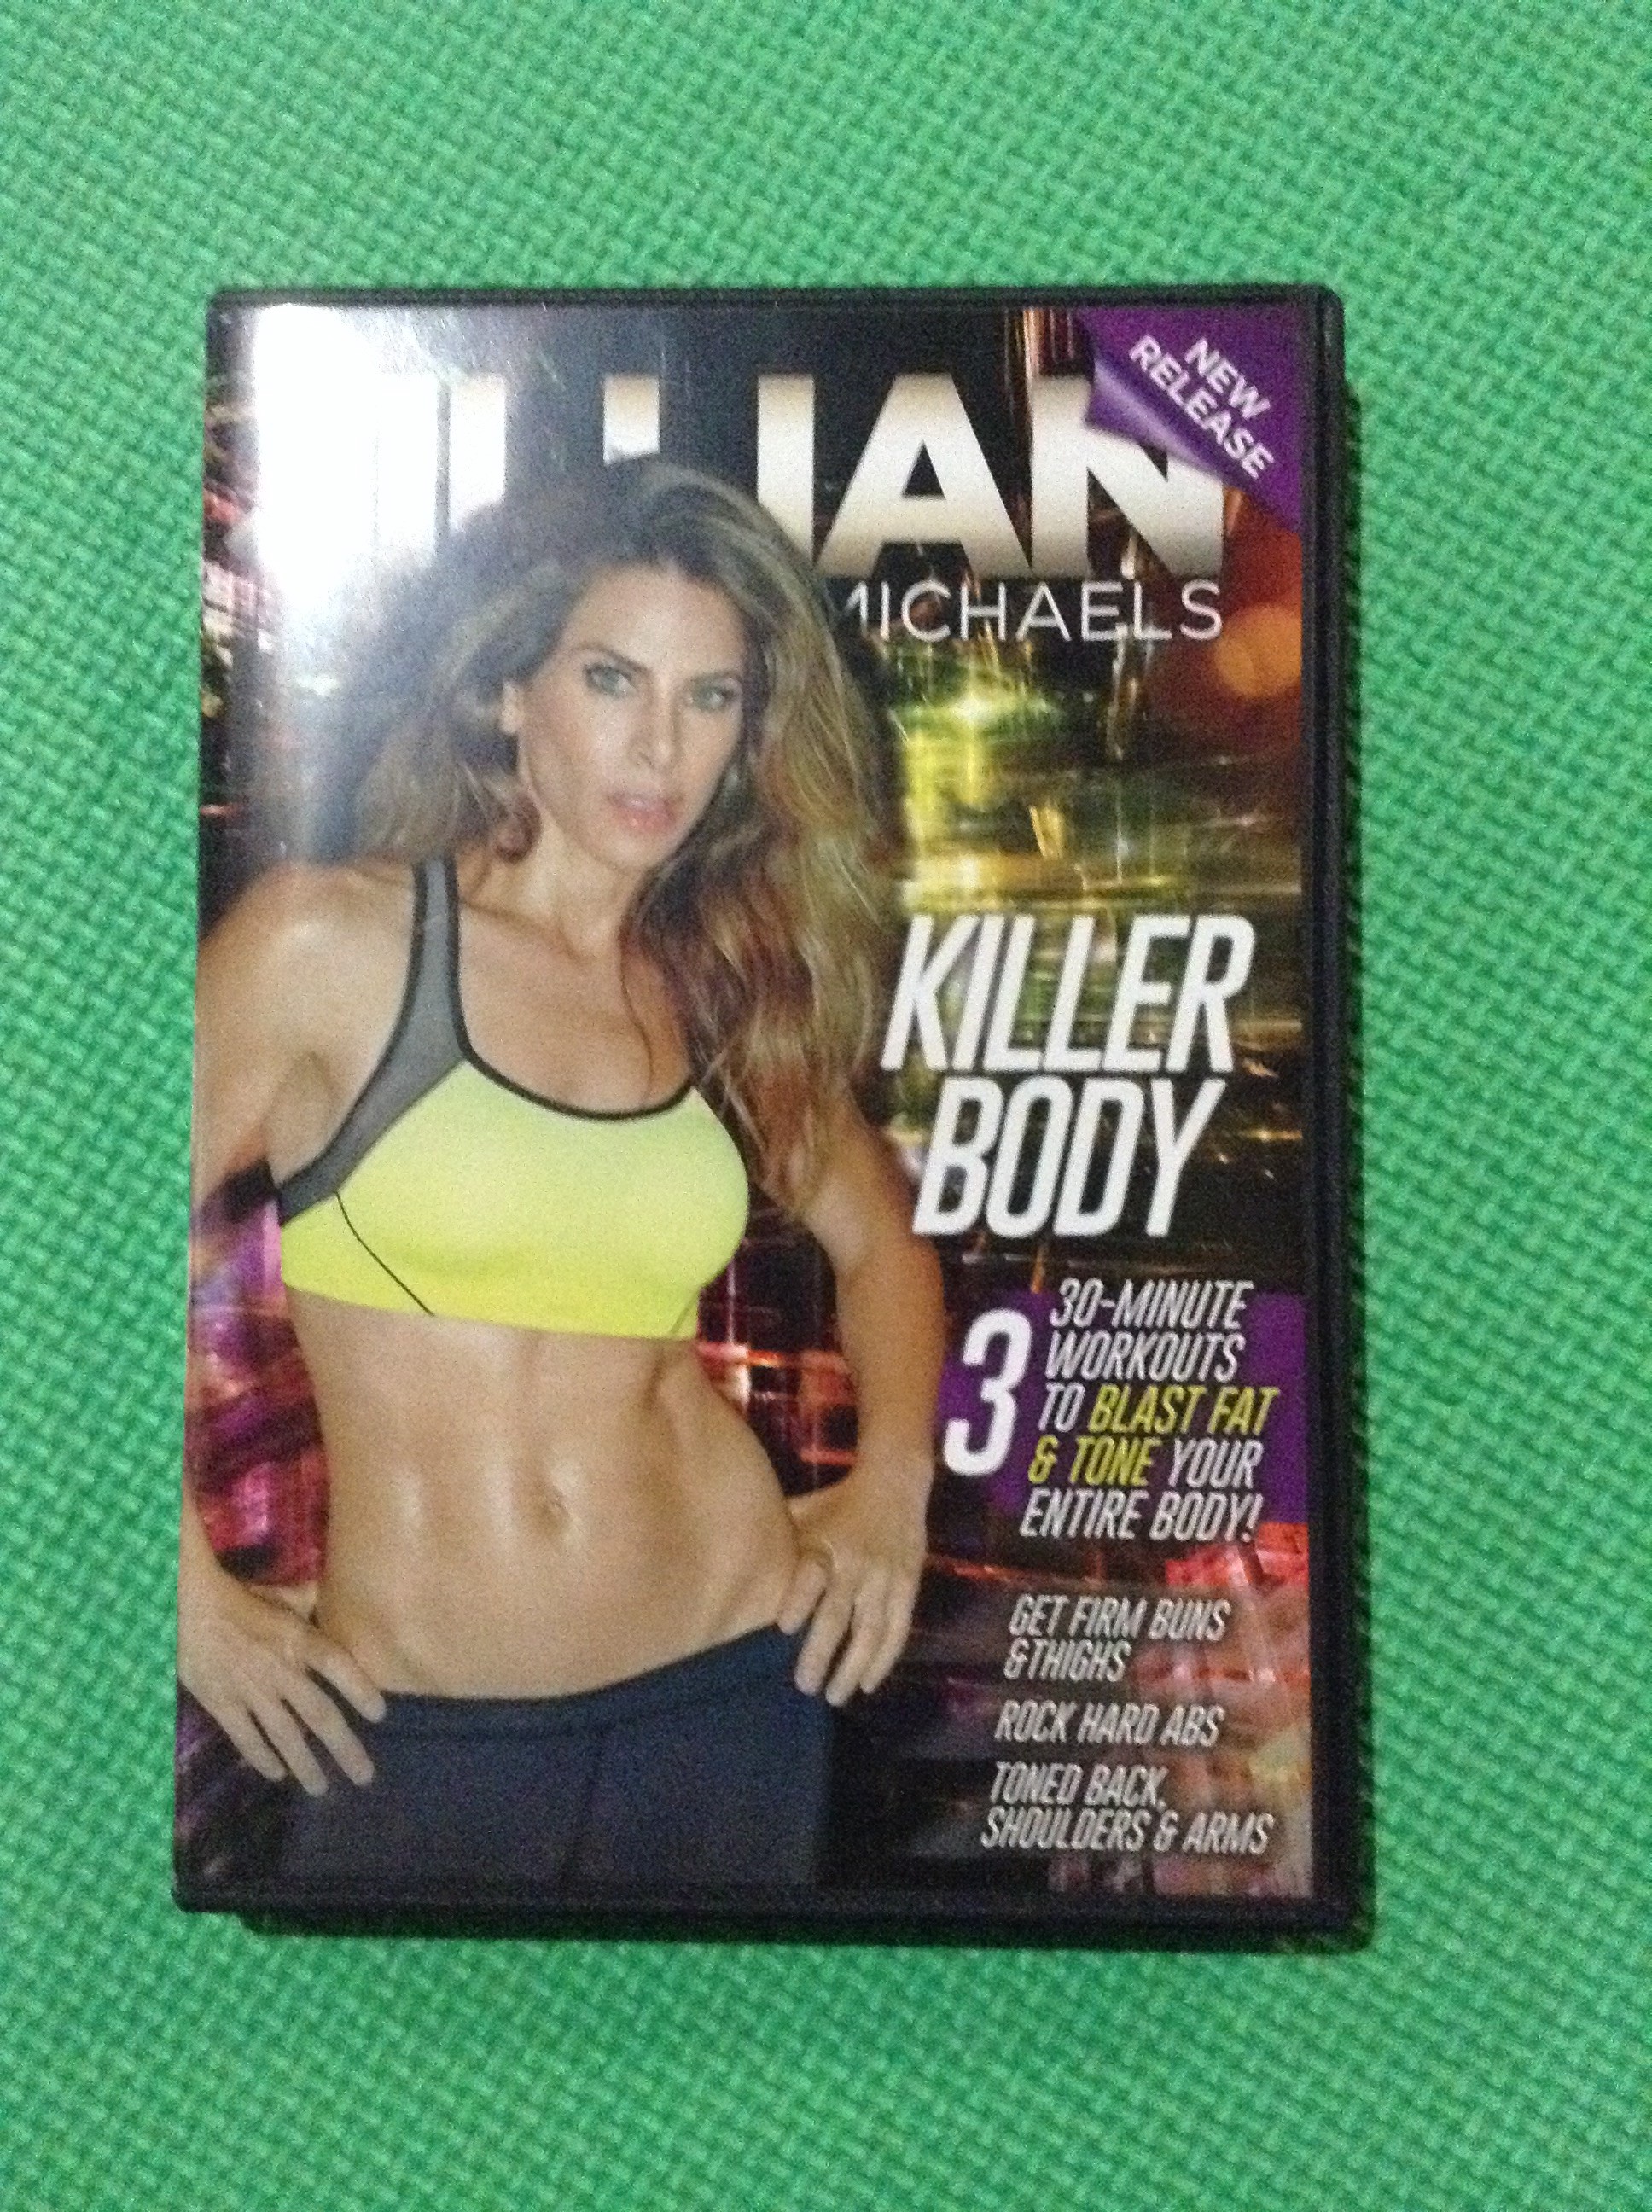 Jillian Michaels NEW Killer Body exercise dvd review -March 2015 release